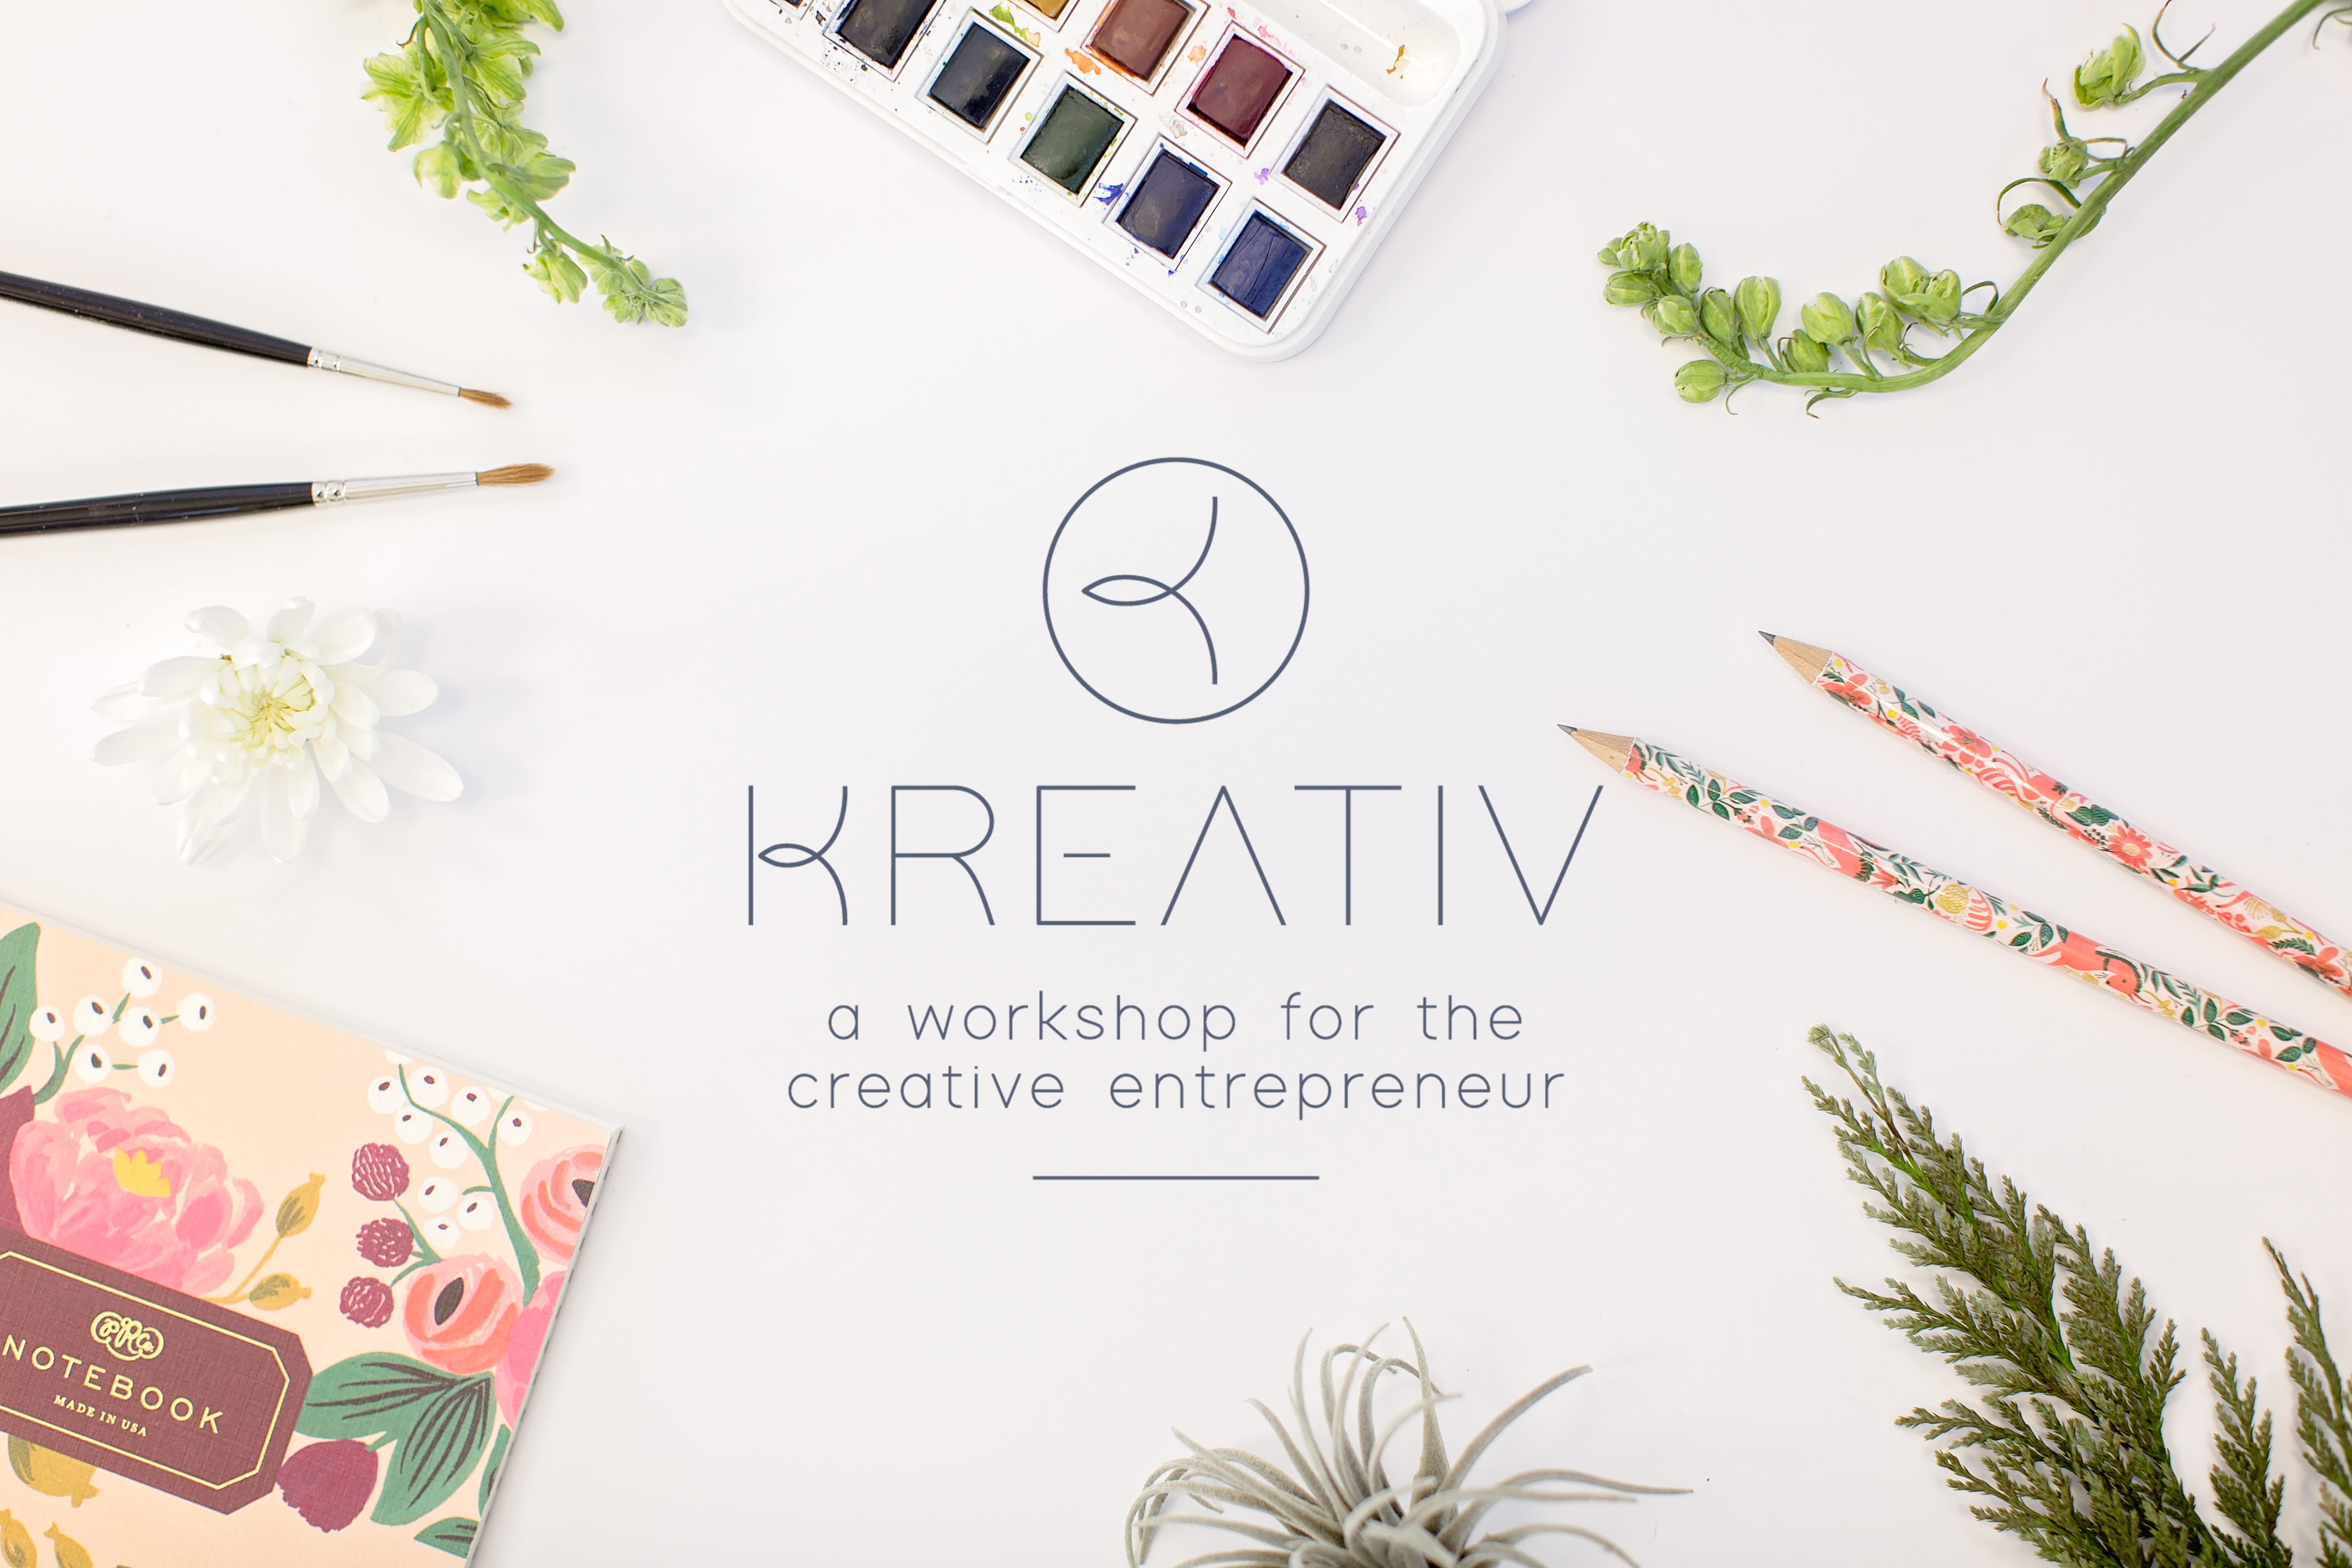 kreativ workshops